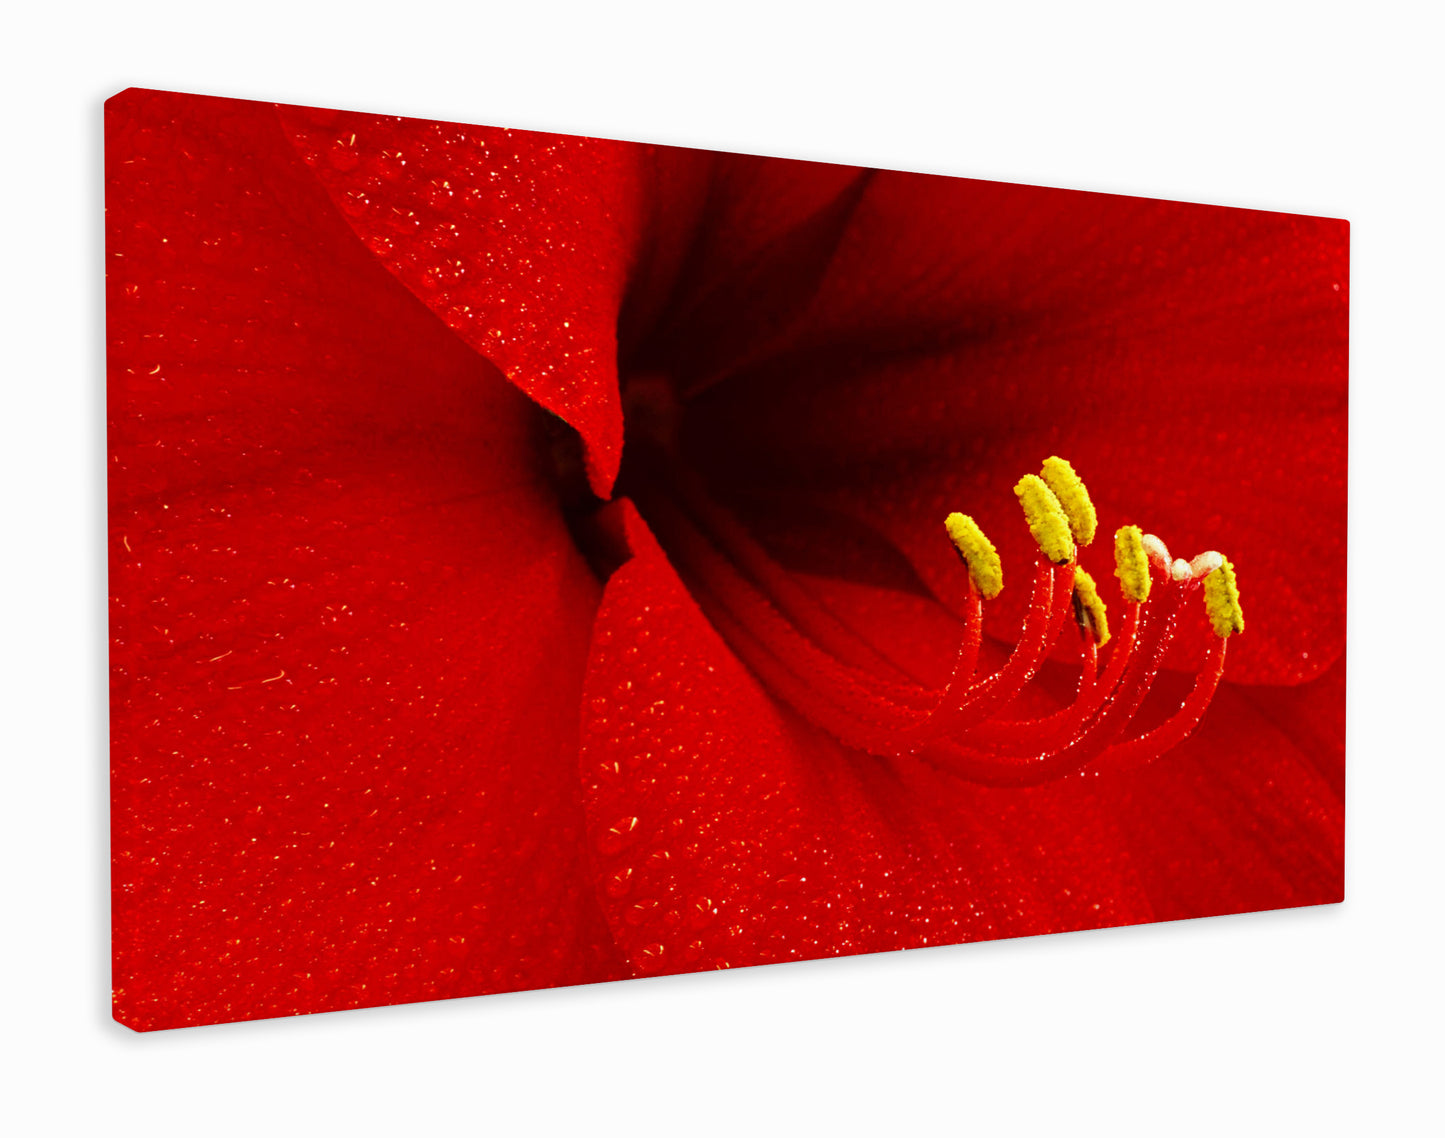 Rain on red petals